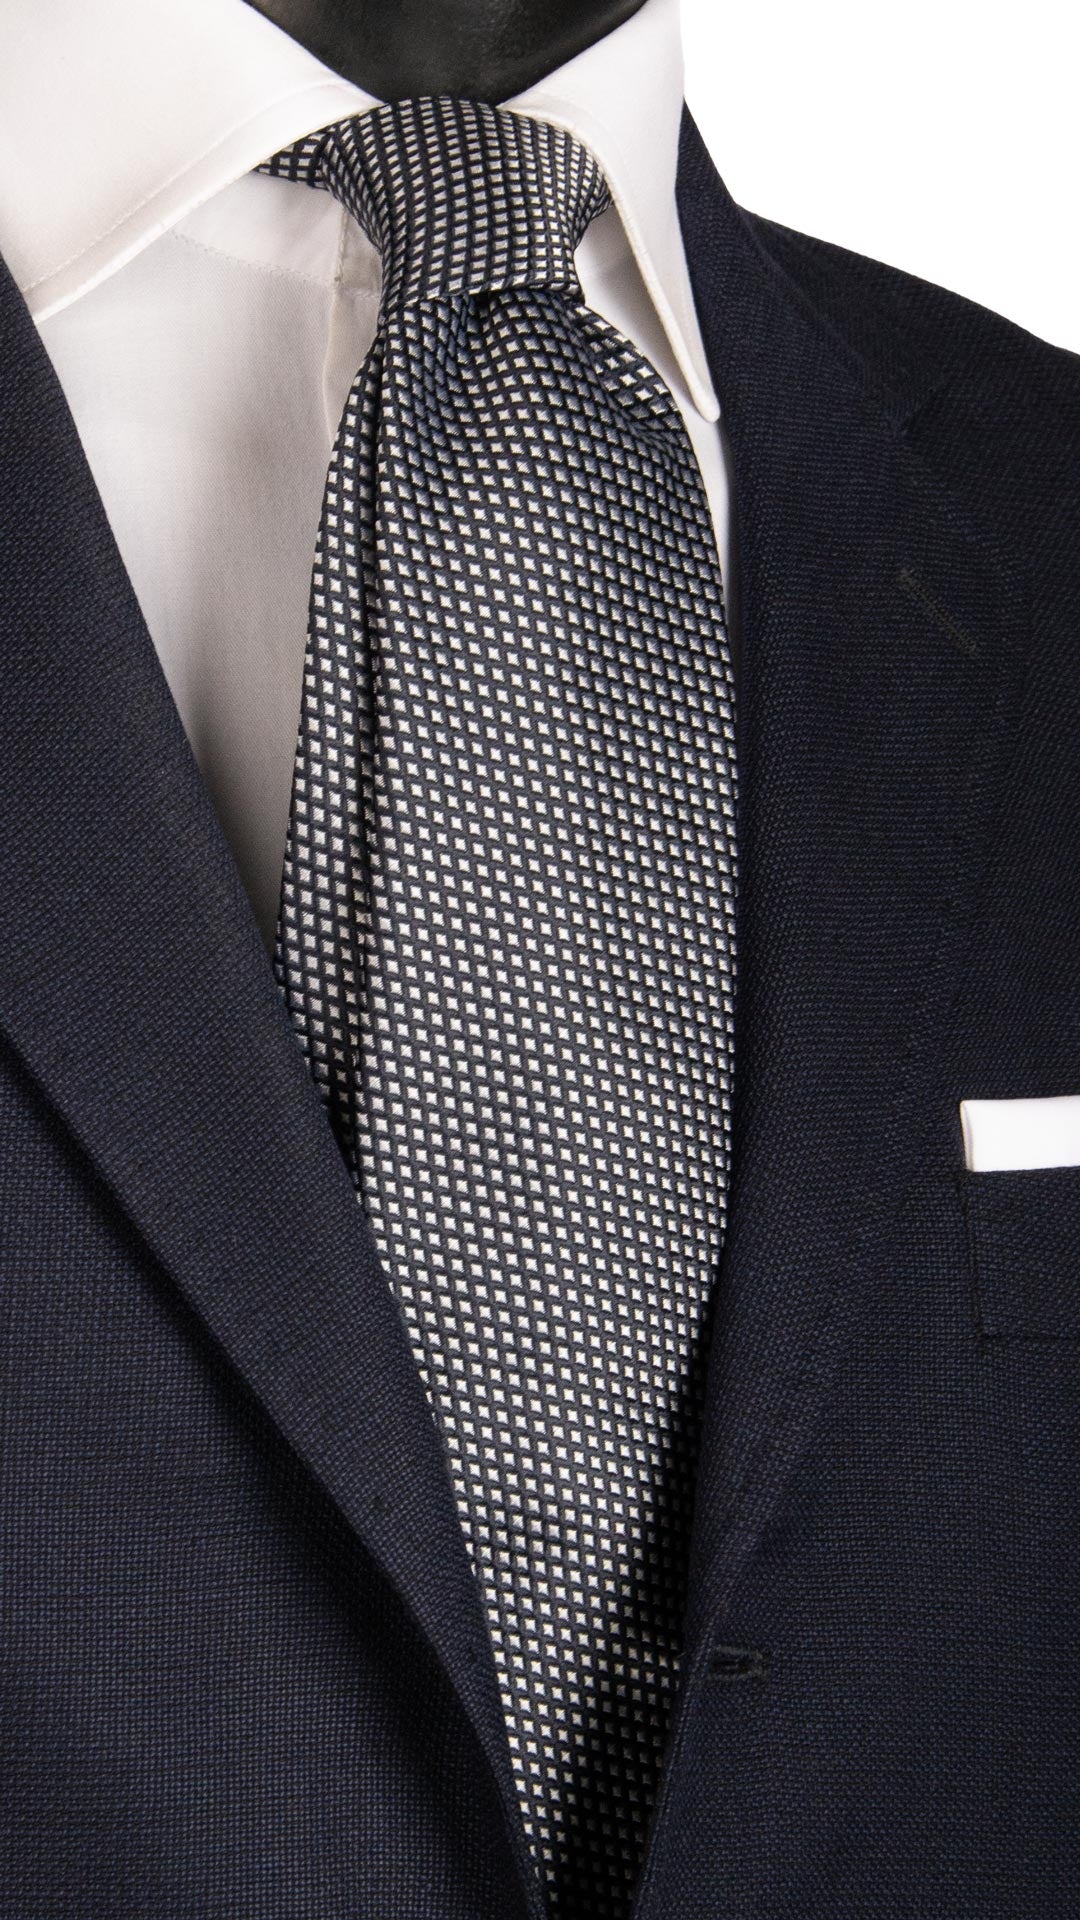 Cravatta da Cerimonia di Seta Blu Grigia Argento Made in Italy Graffeo Cravatte